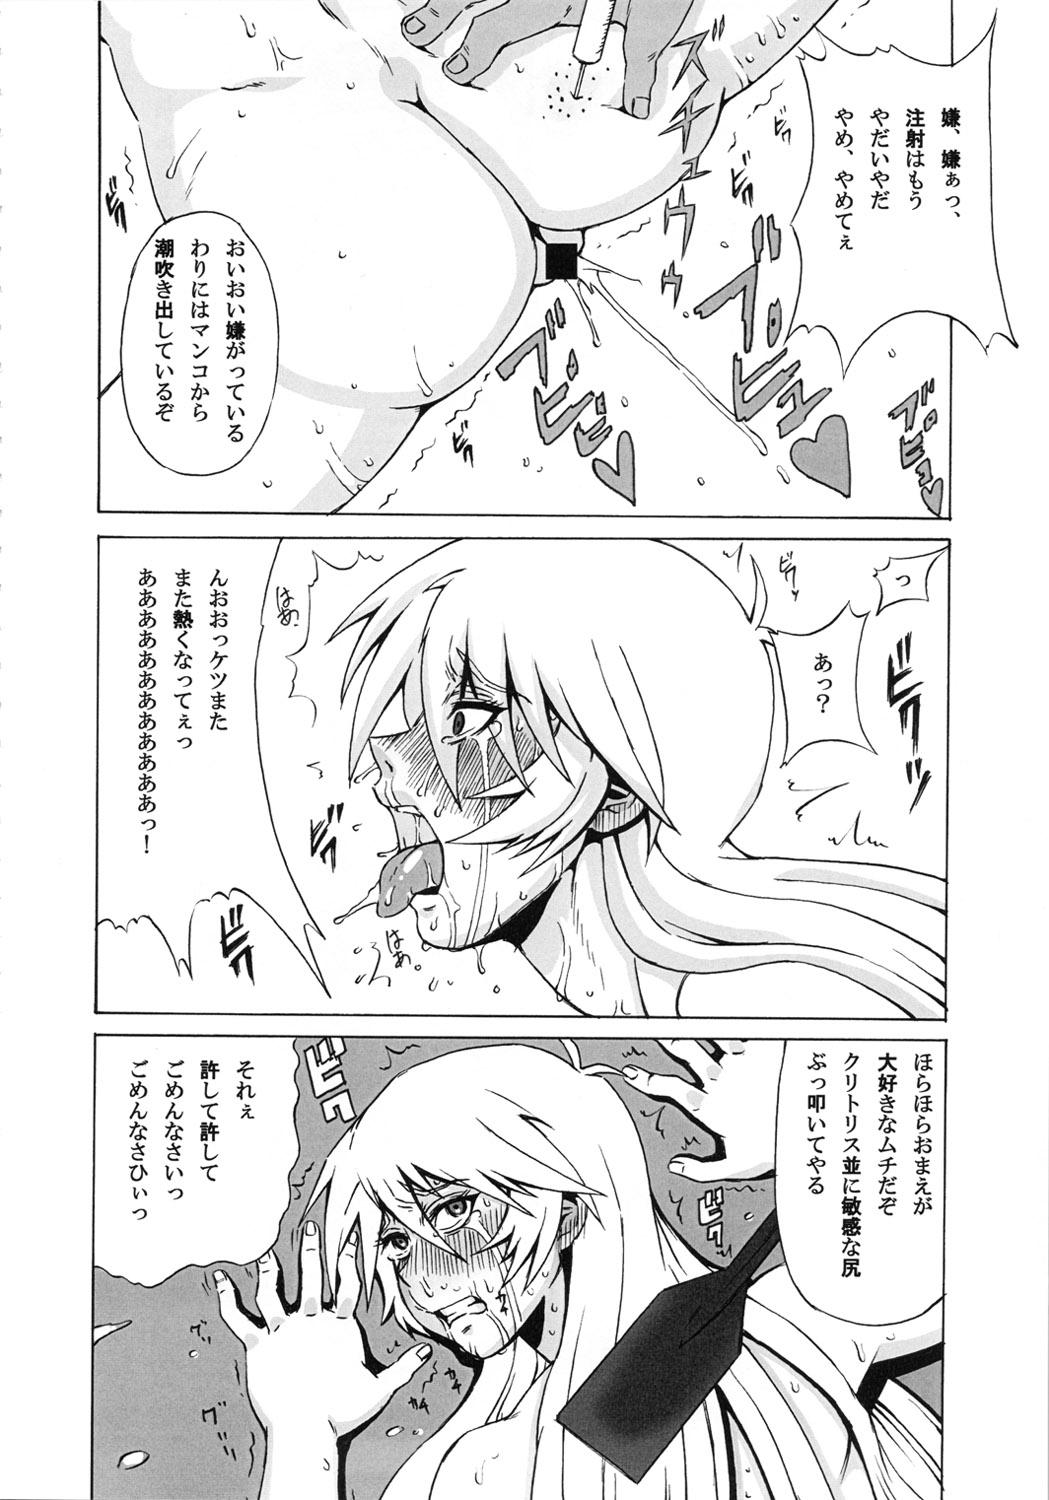 Price Aki to Mikage ni Iroiro Shitemita. - Yu-gi-oh 5ds Banheiro - Page 5